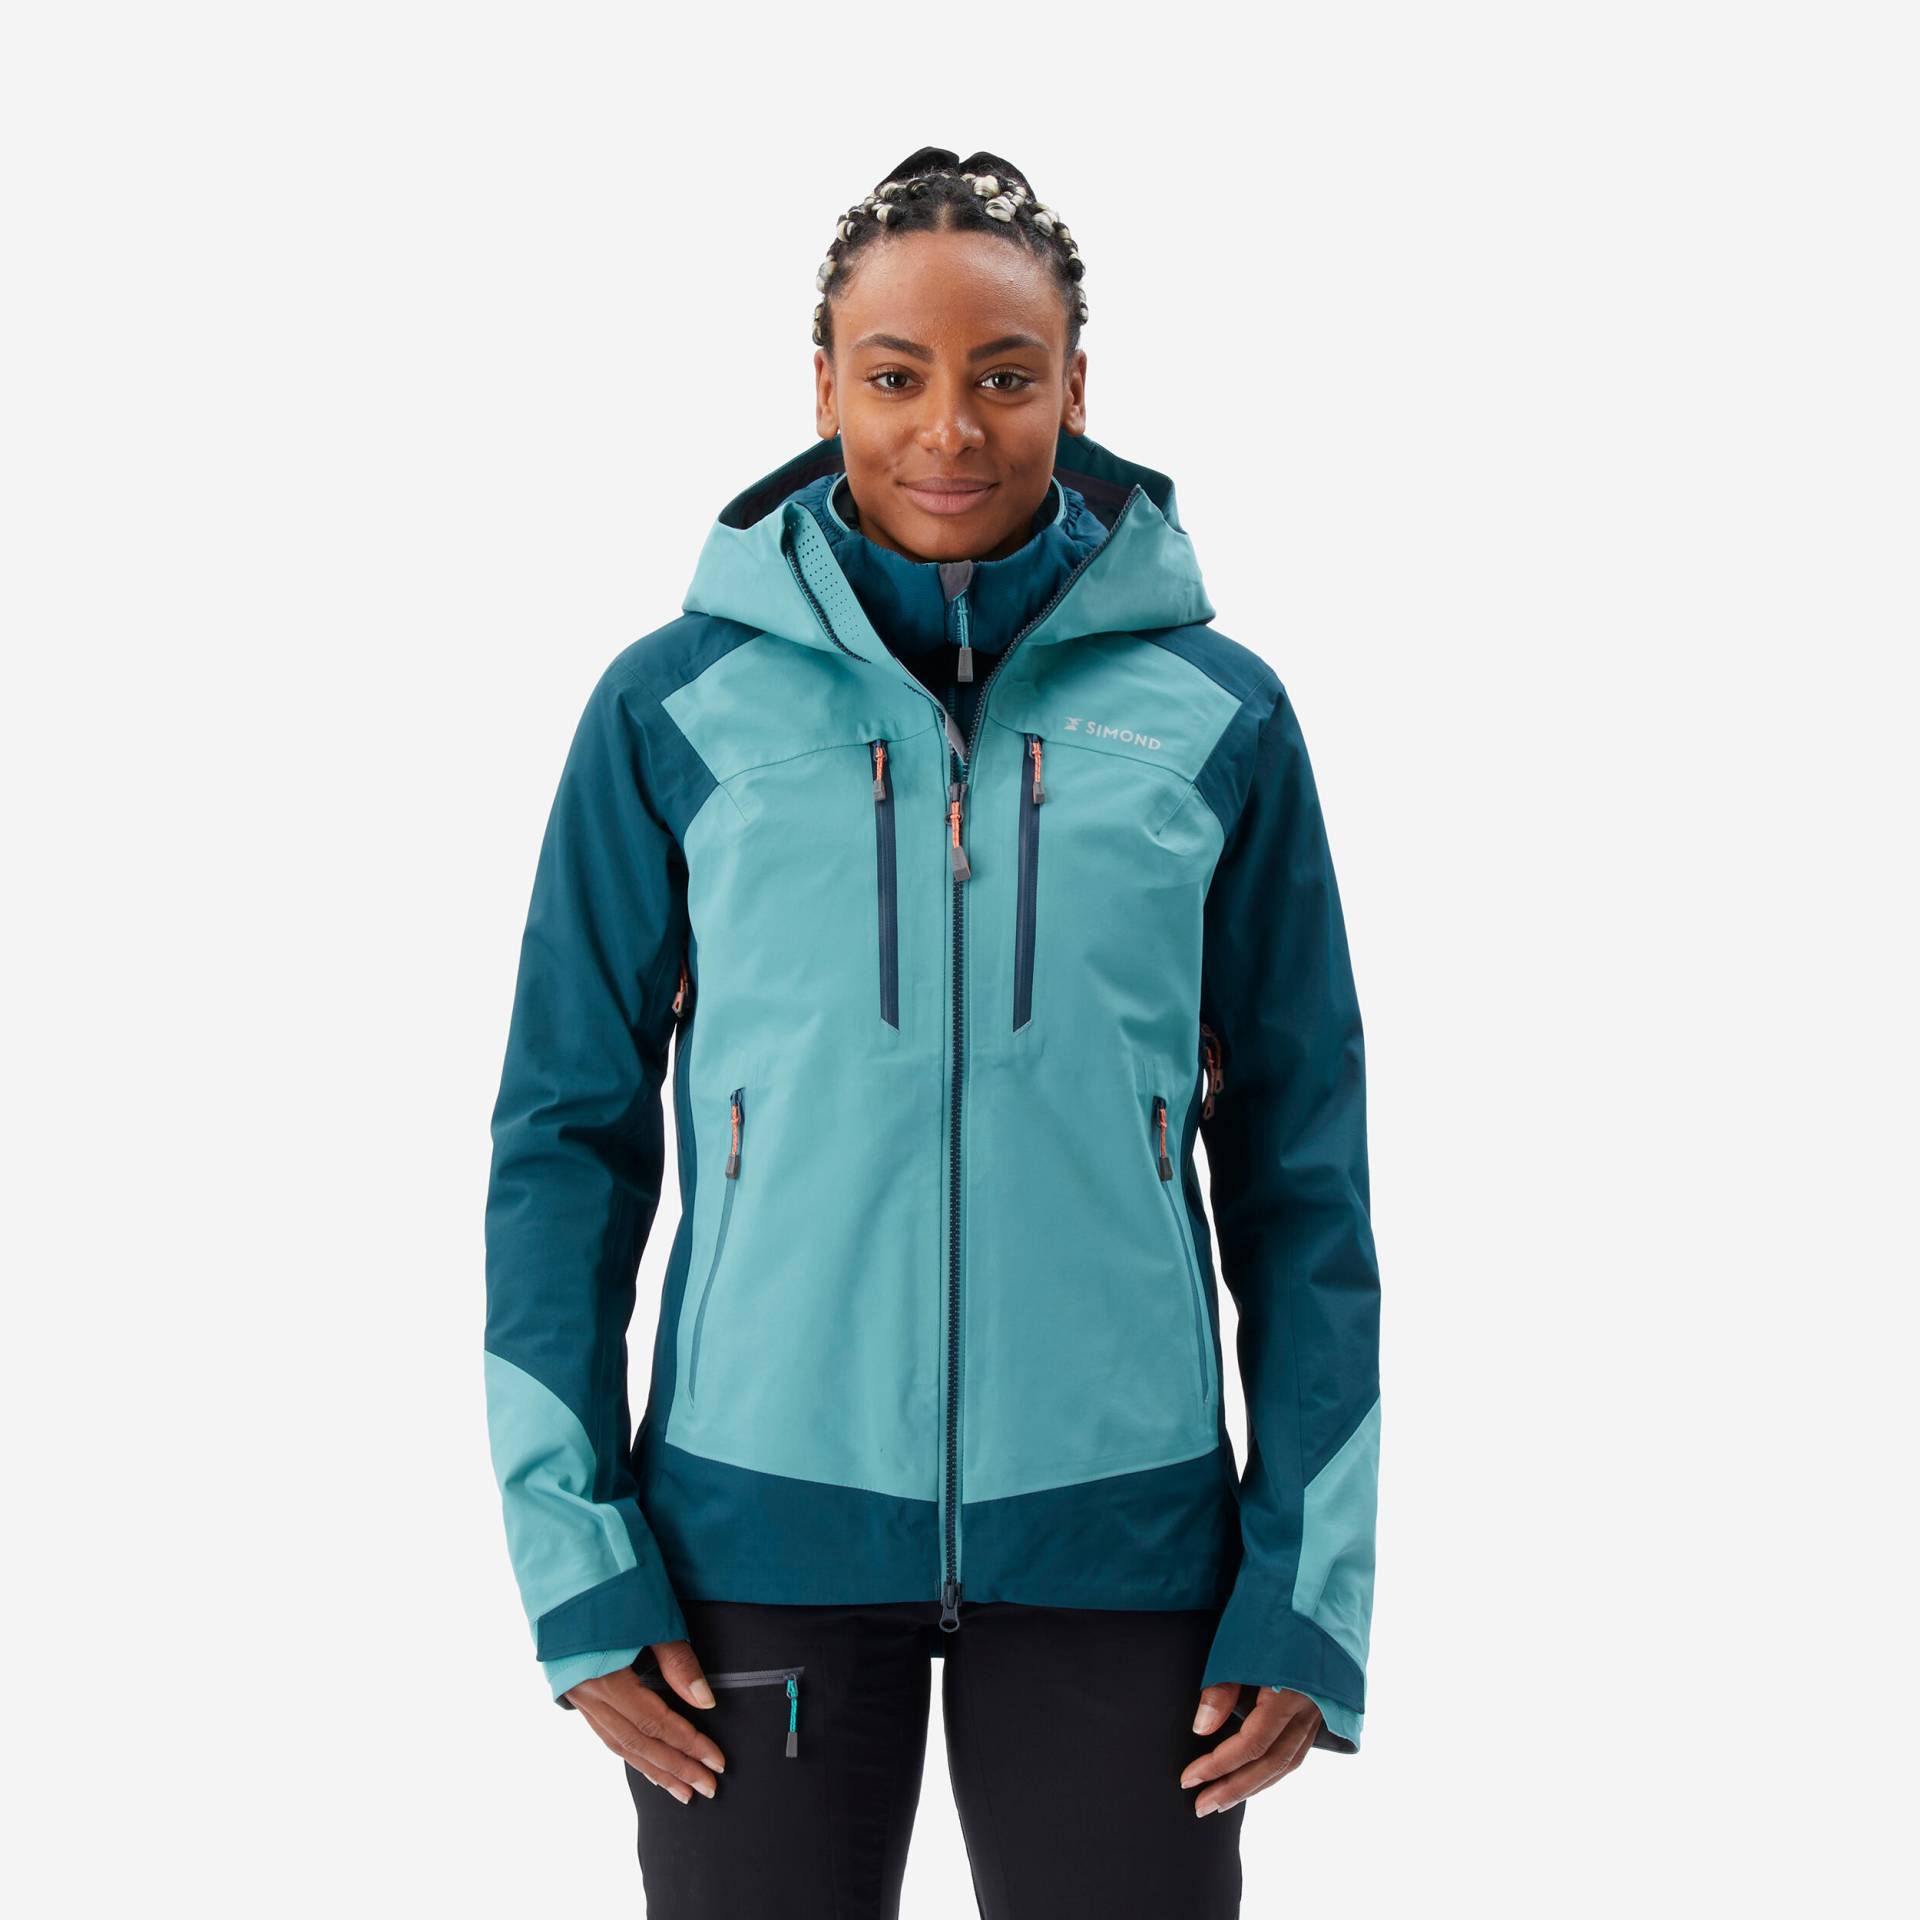 Damen Regenjacke - Alpinism Evo blau von SIMOND